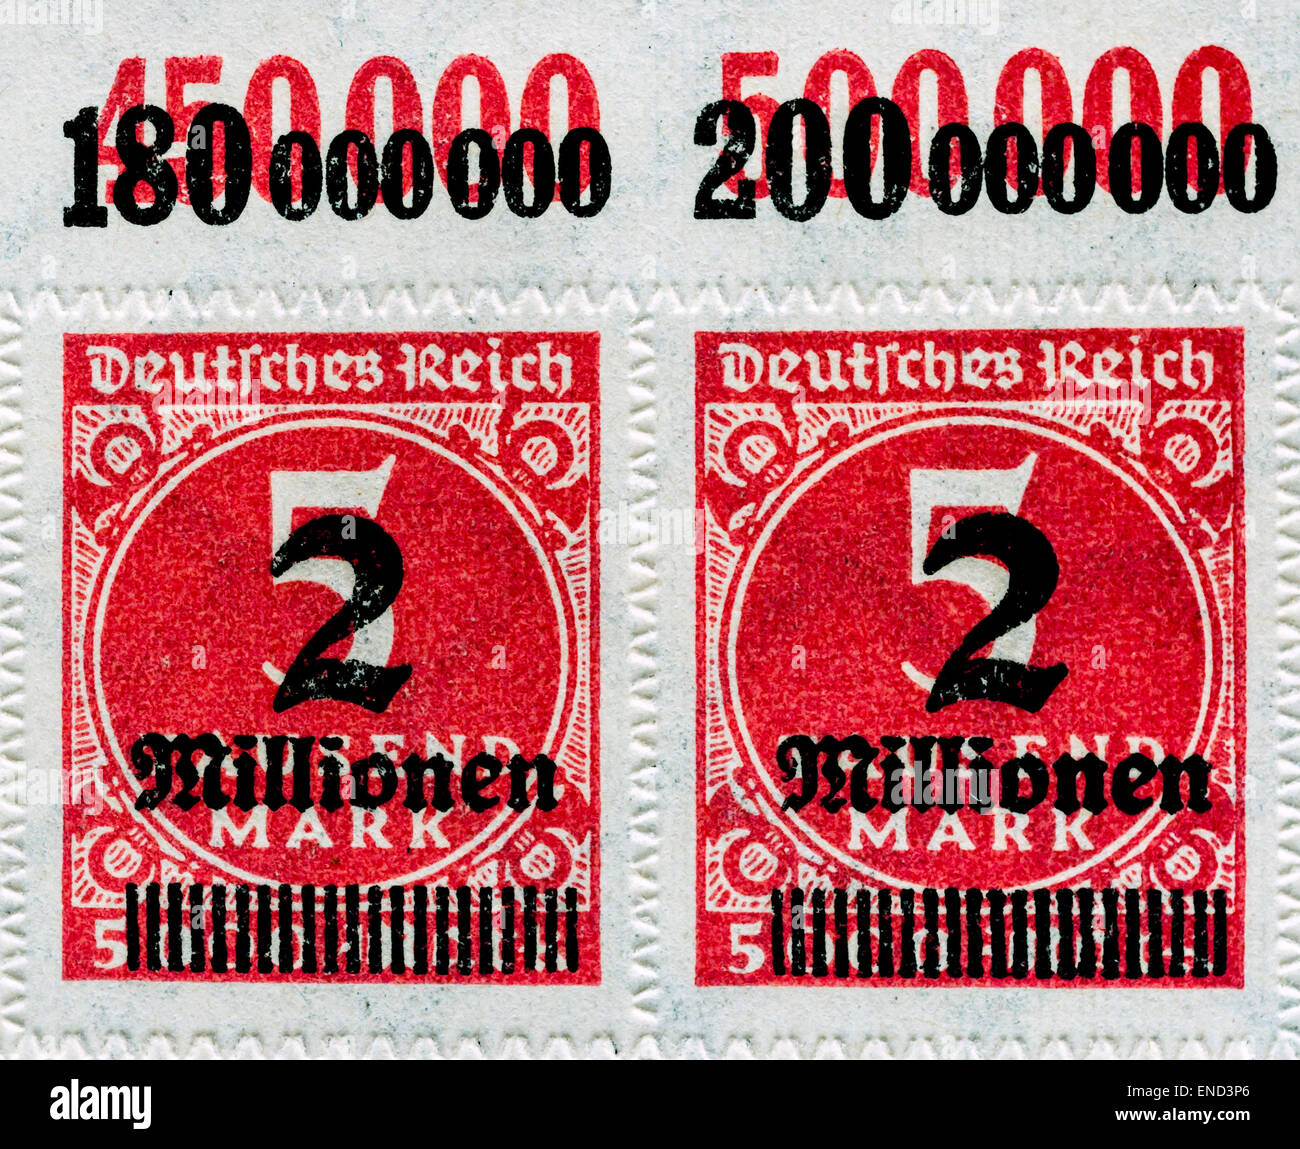 Unused pair of  1923 German 2,000,000 Mark overprinted “hyper-inflation” stamps - Germany. Stock Photo